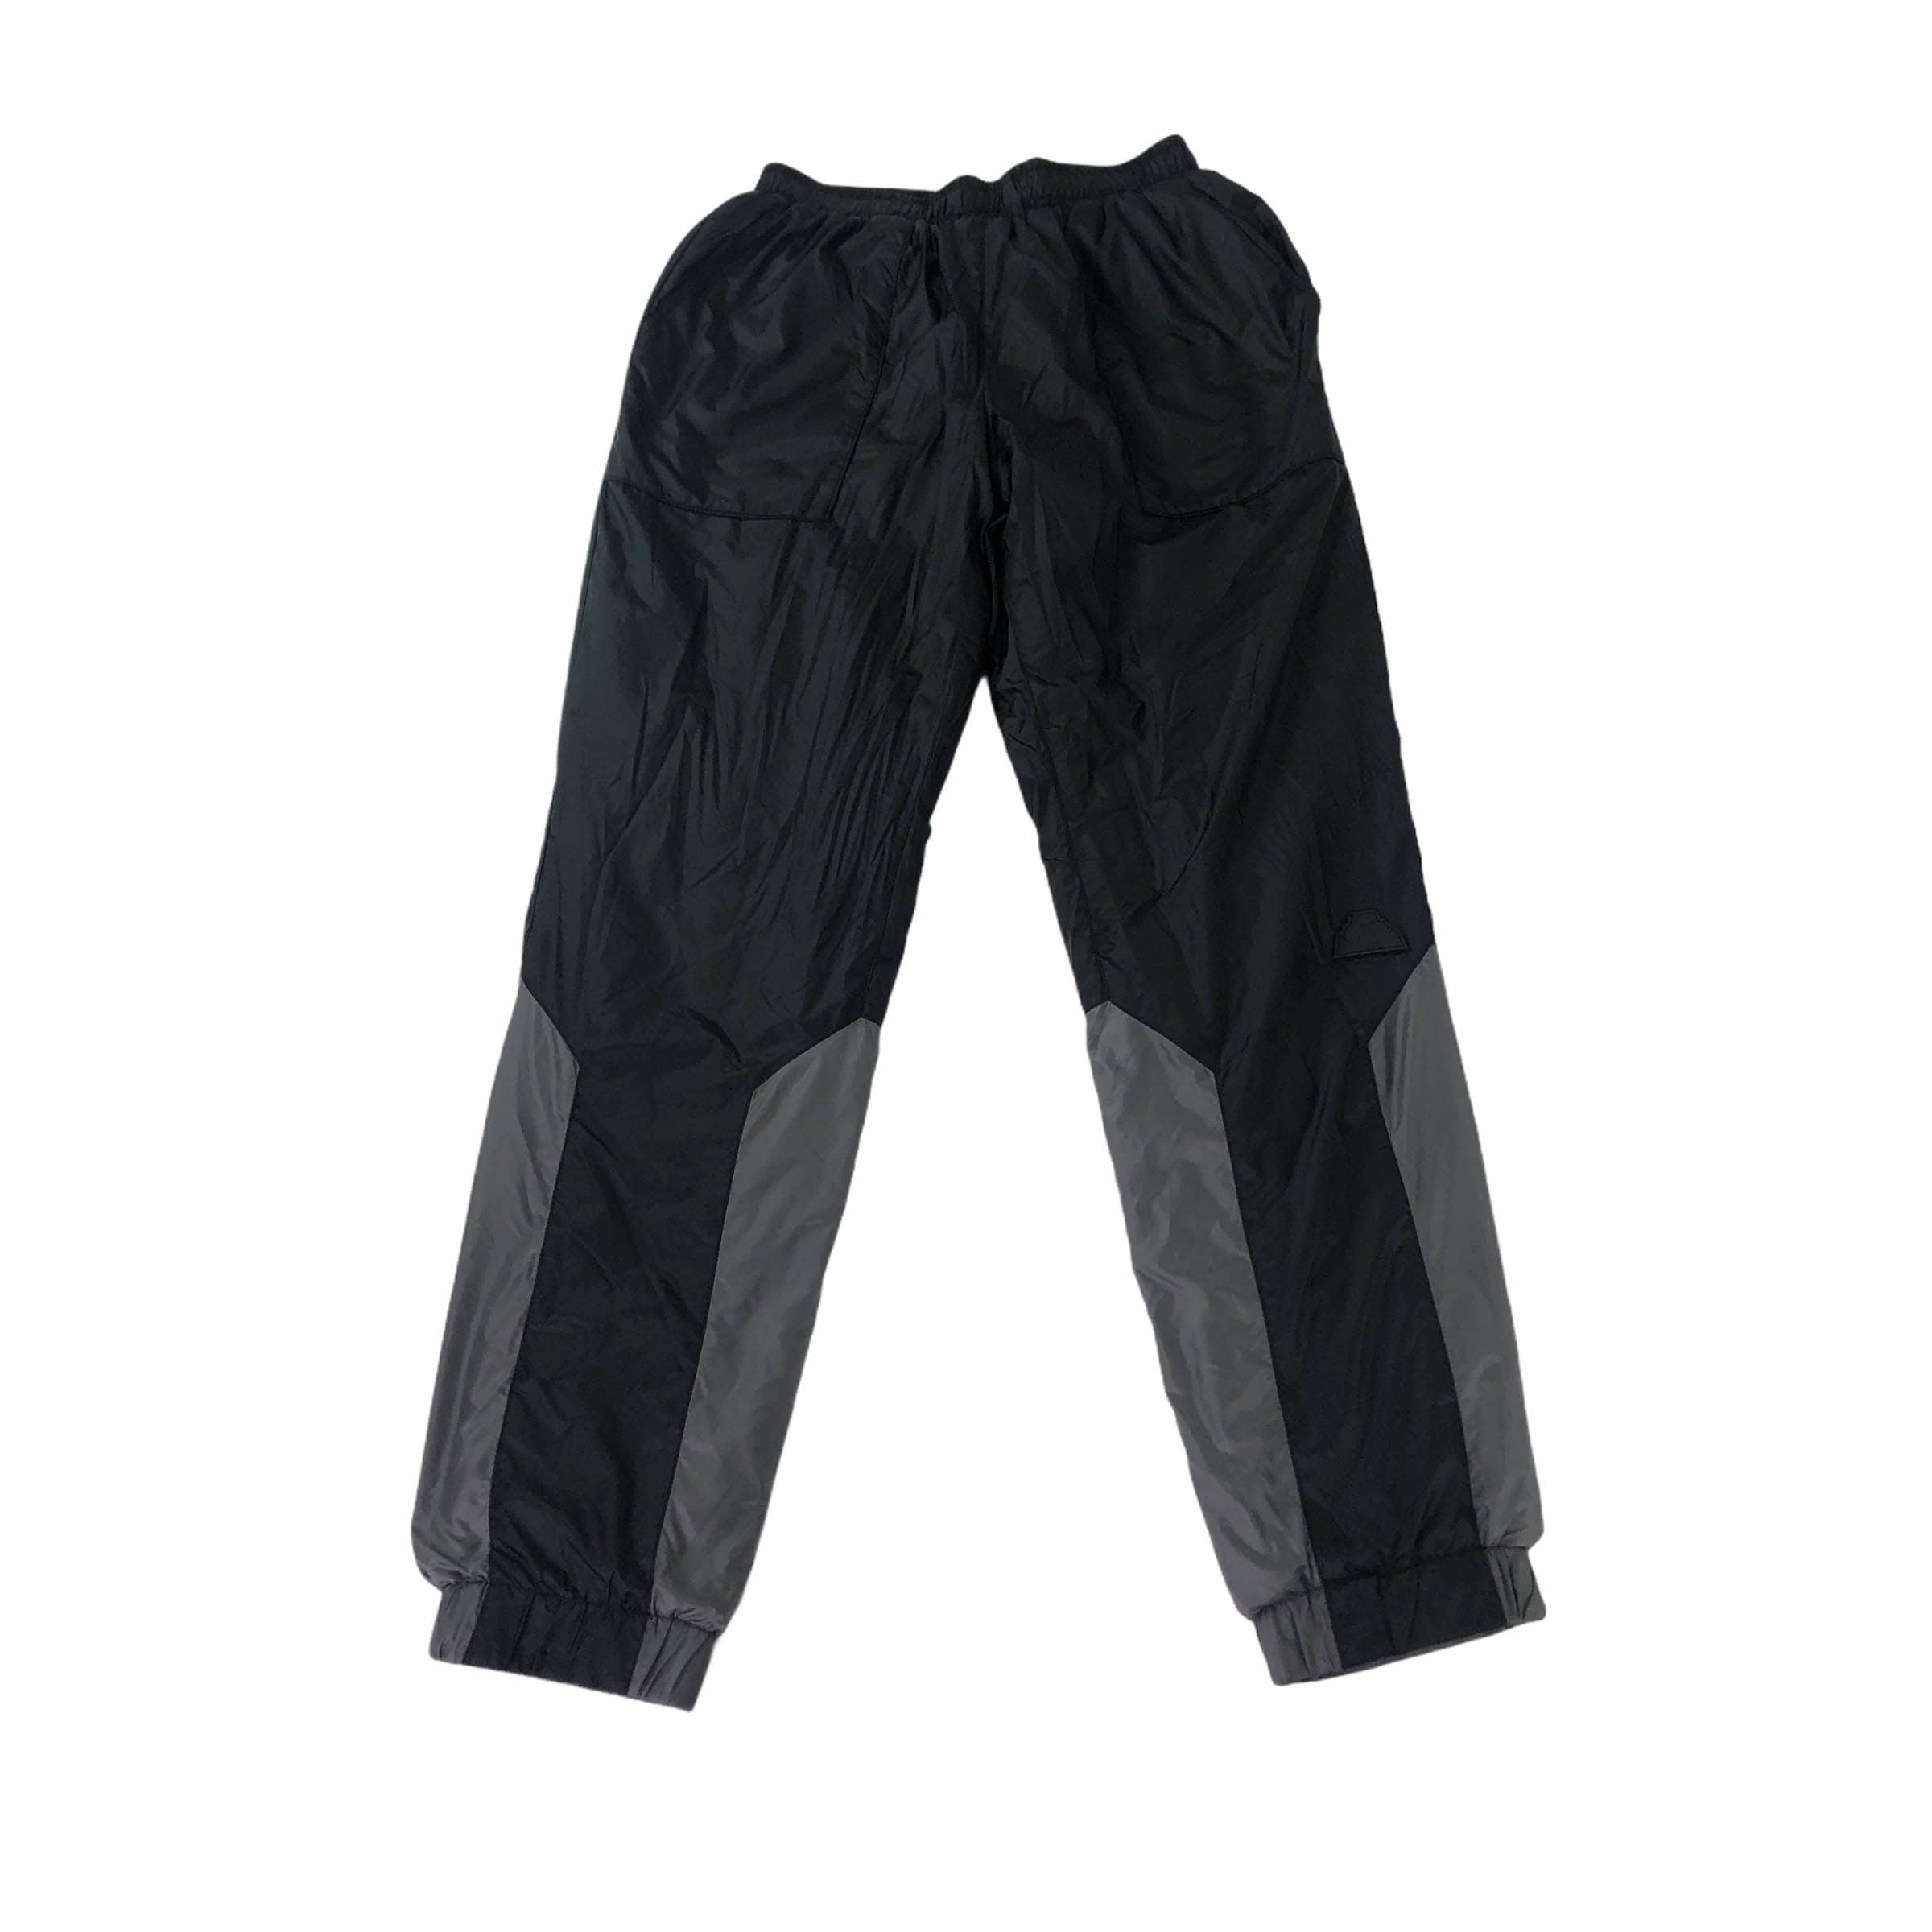 [Cavempt] Black and Gray Track Pants - Size L